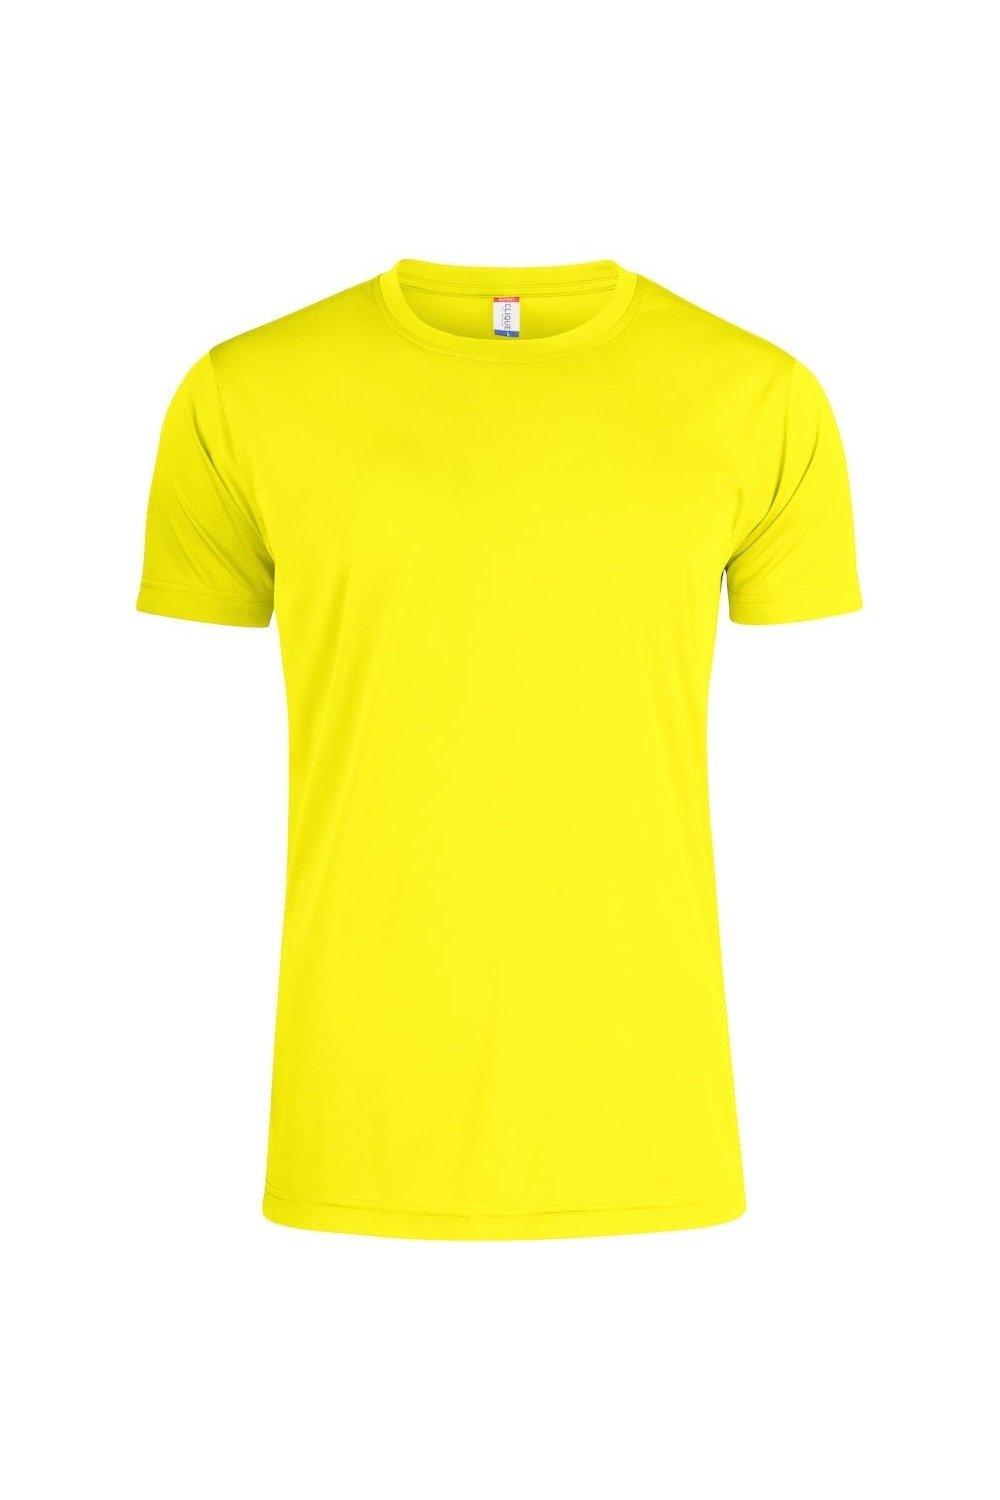 Активная футболка Clique, желтый футболка clique с надписью 42 размер